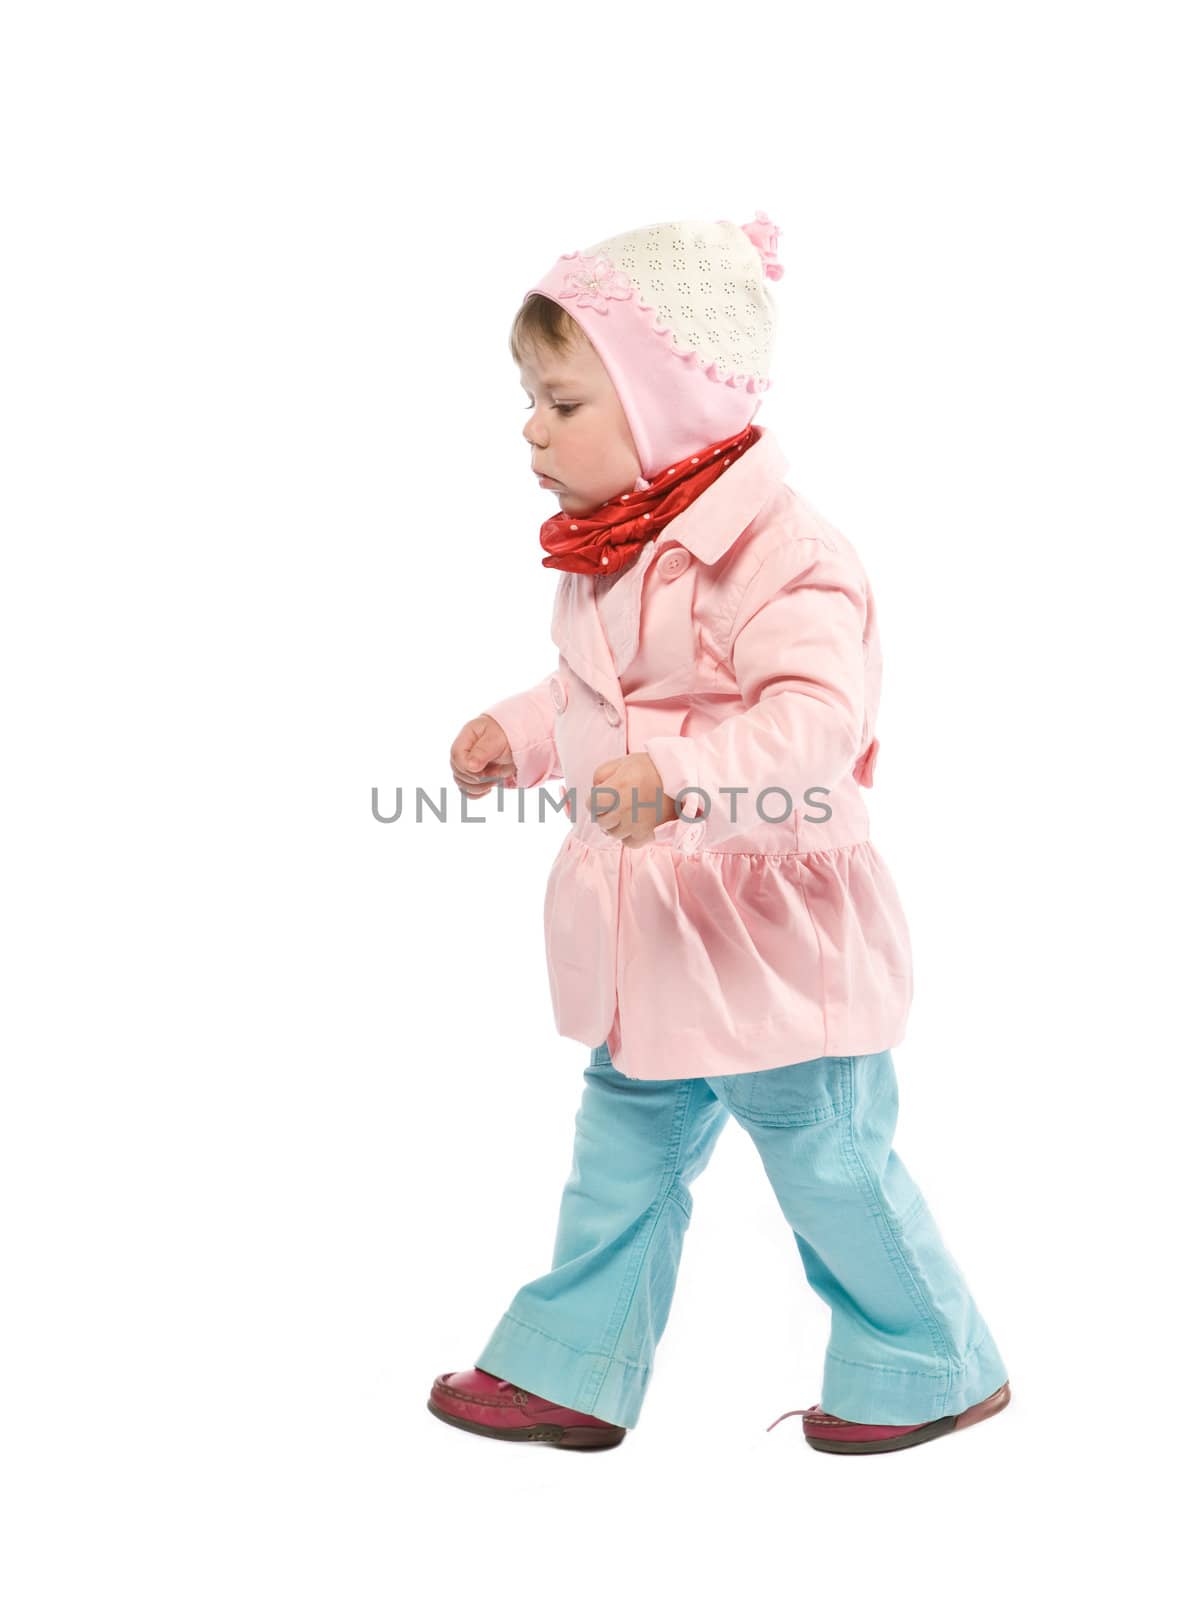 Walking child by fotoedgaras